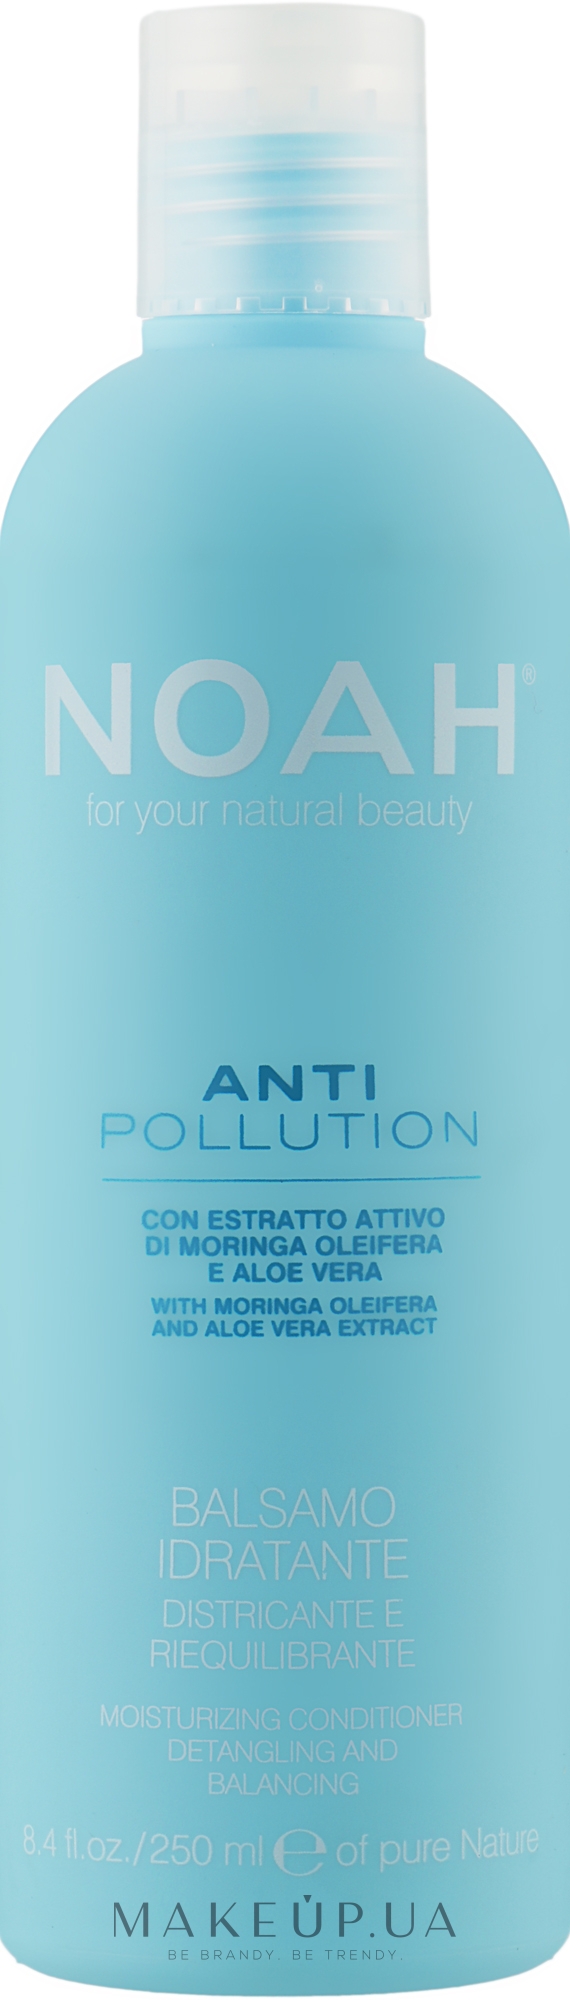 Увлажняющий кондиционер для волос - Noah Anti Pollution Moisturizing Conditioner — фото 250ml